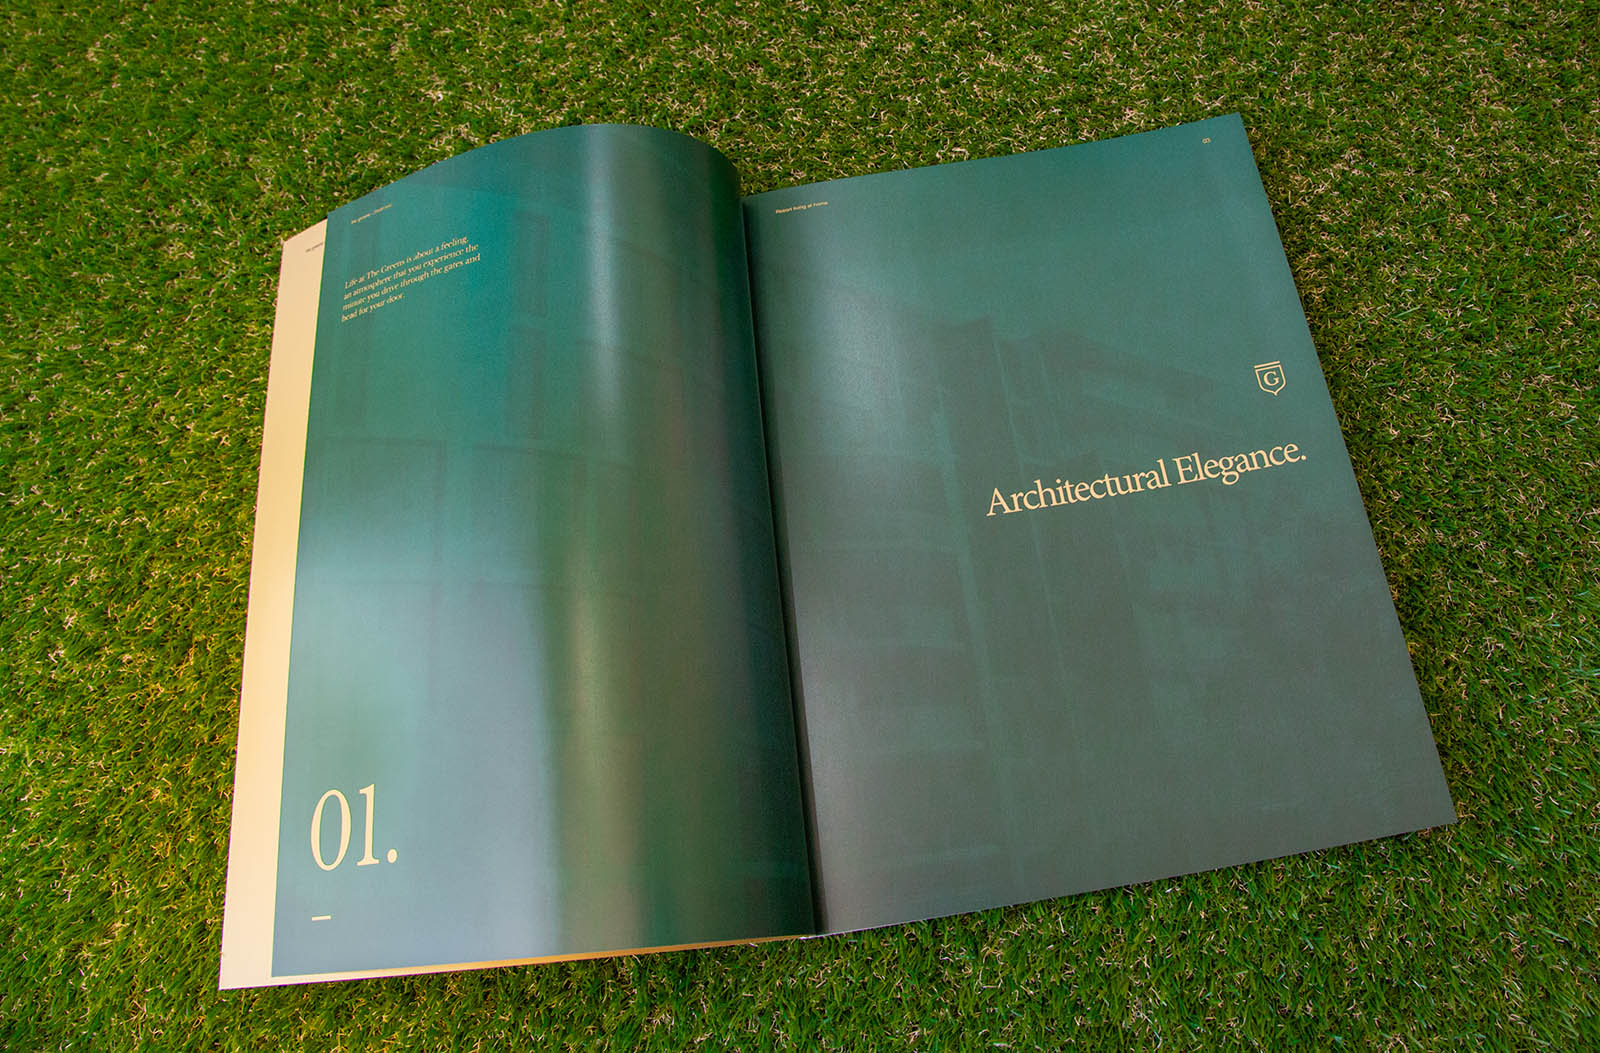 The Greens Strathfield Development. Branding by Allan Chan. Property Brochure Design.